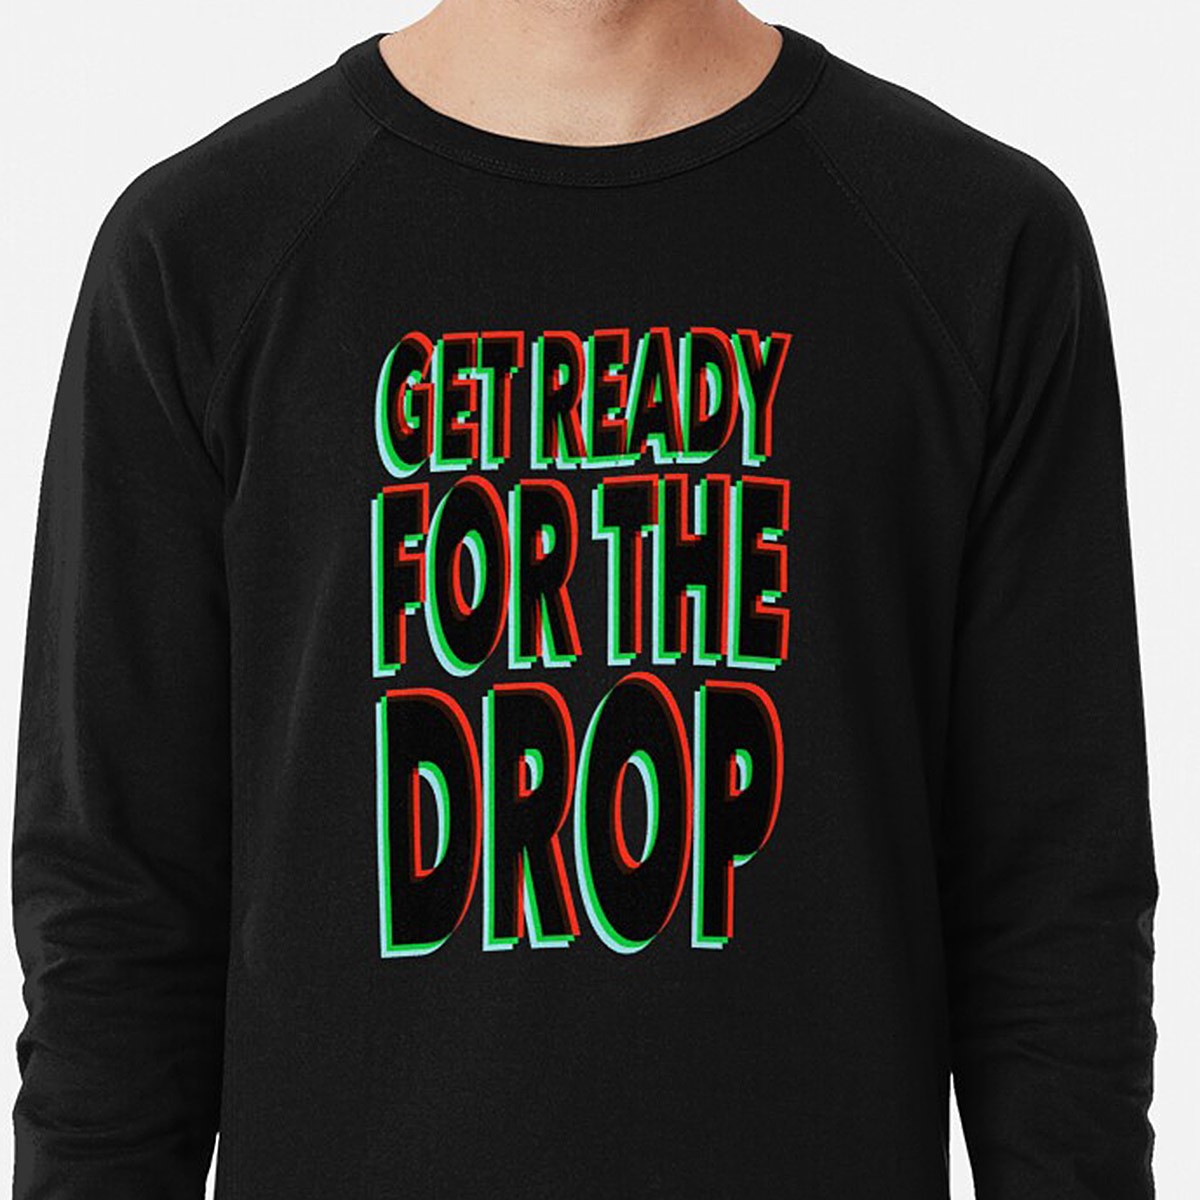 Get Ready for the Drop Lightweight Sweatshirt by NTK Apparel